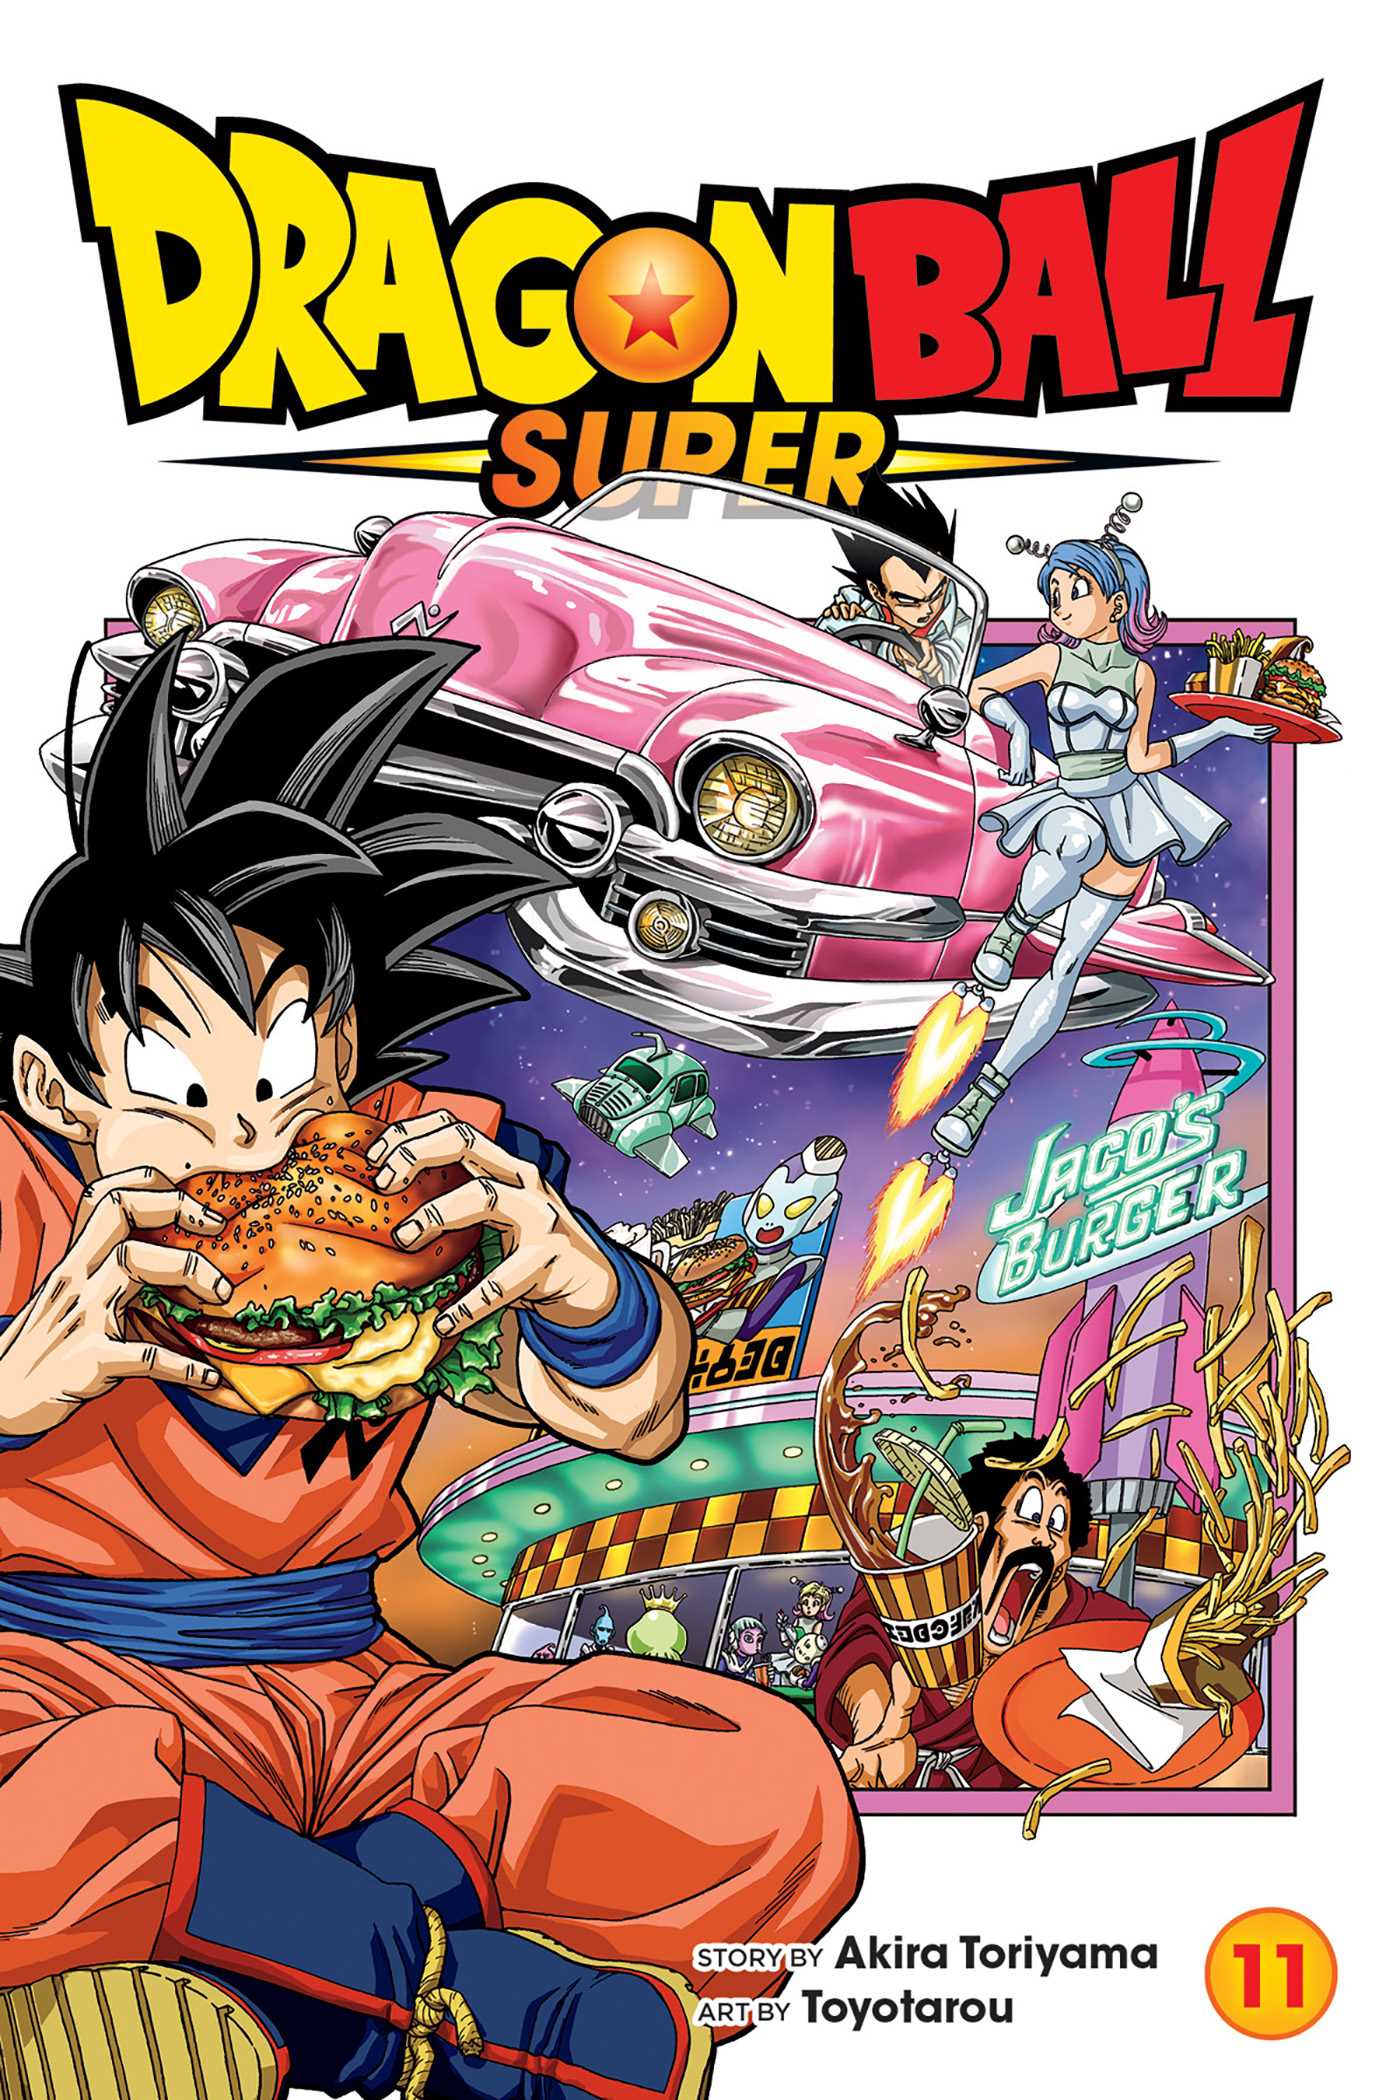 Dragon Ball Super (Mangá), Wiki